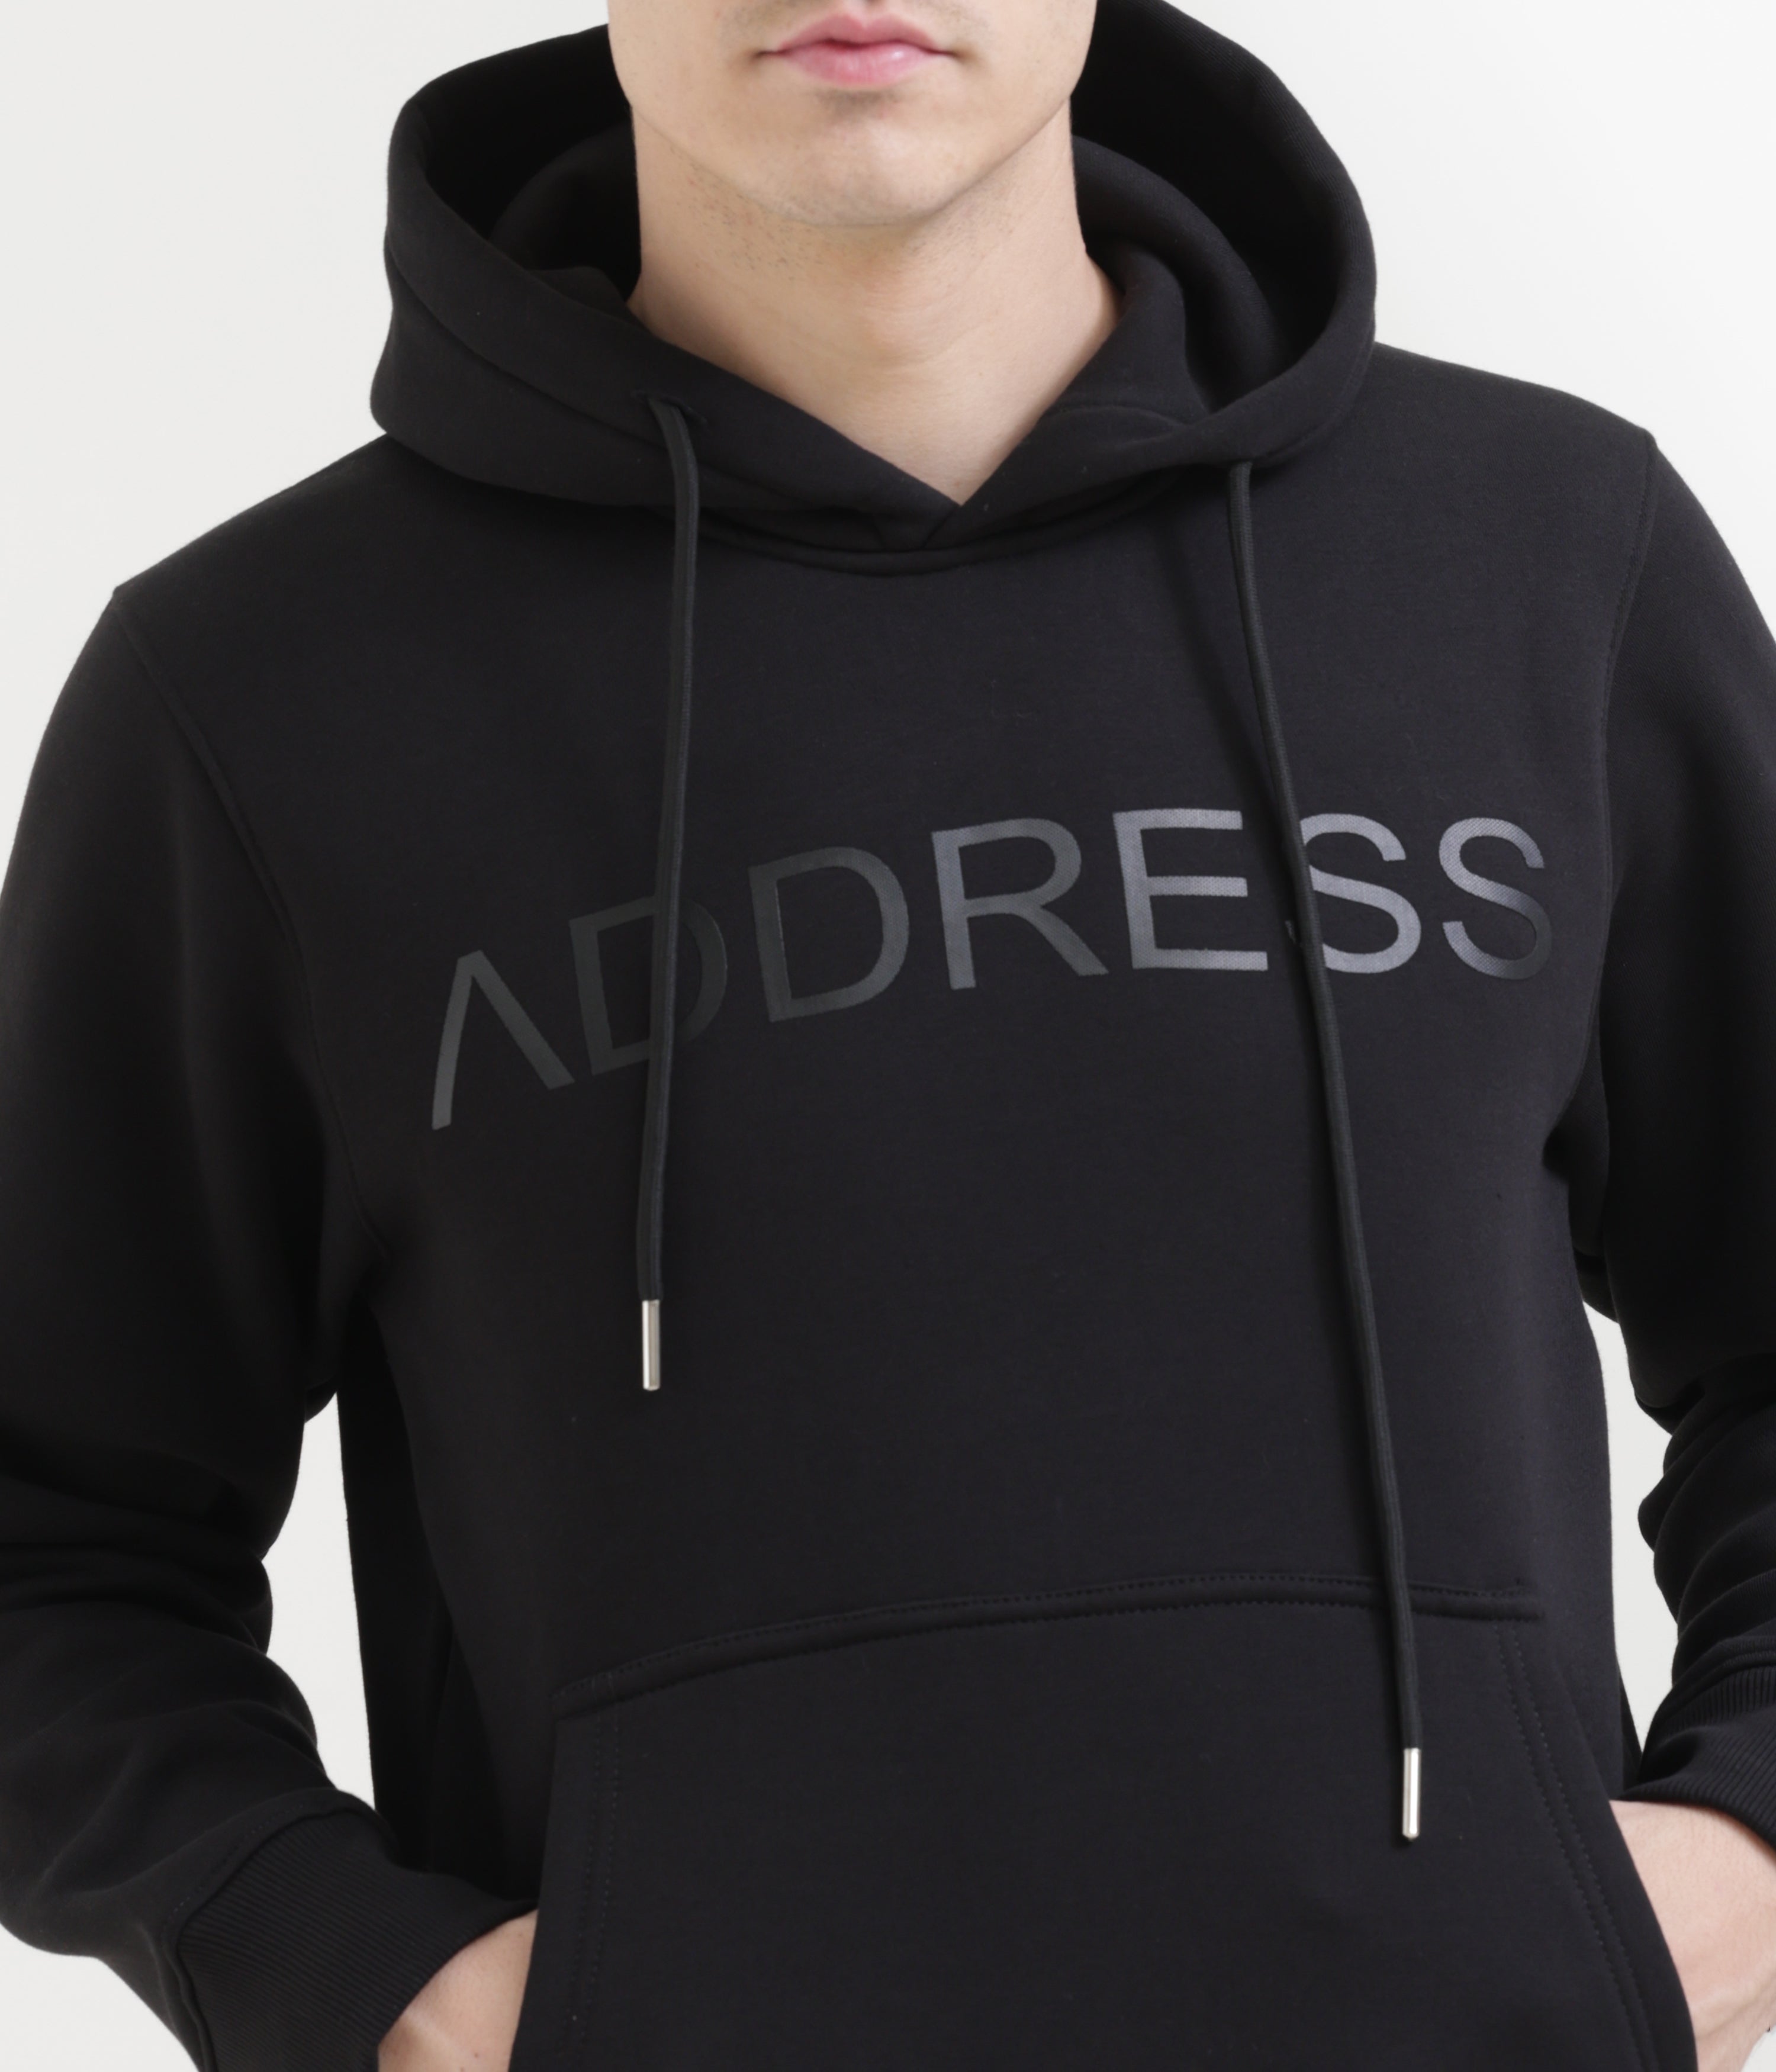 Versatile Grey Men's Hoodies: Stylish Comfort – Address Apparels